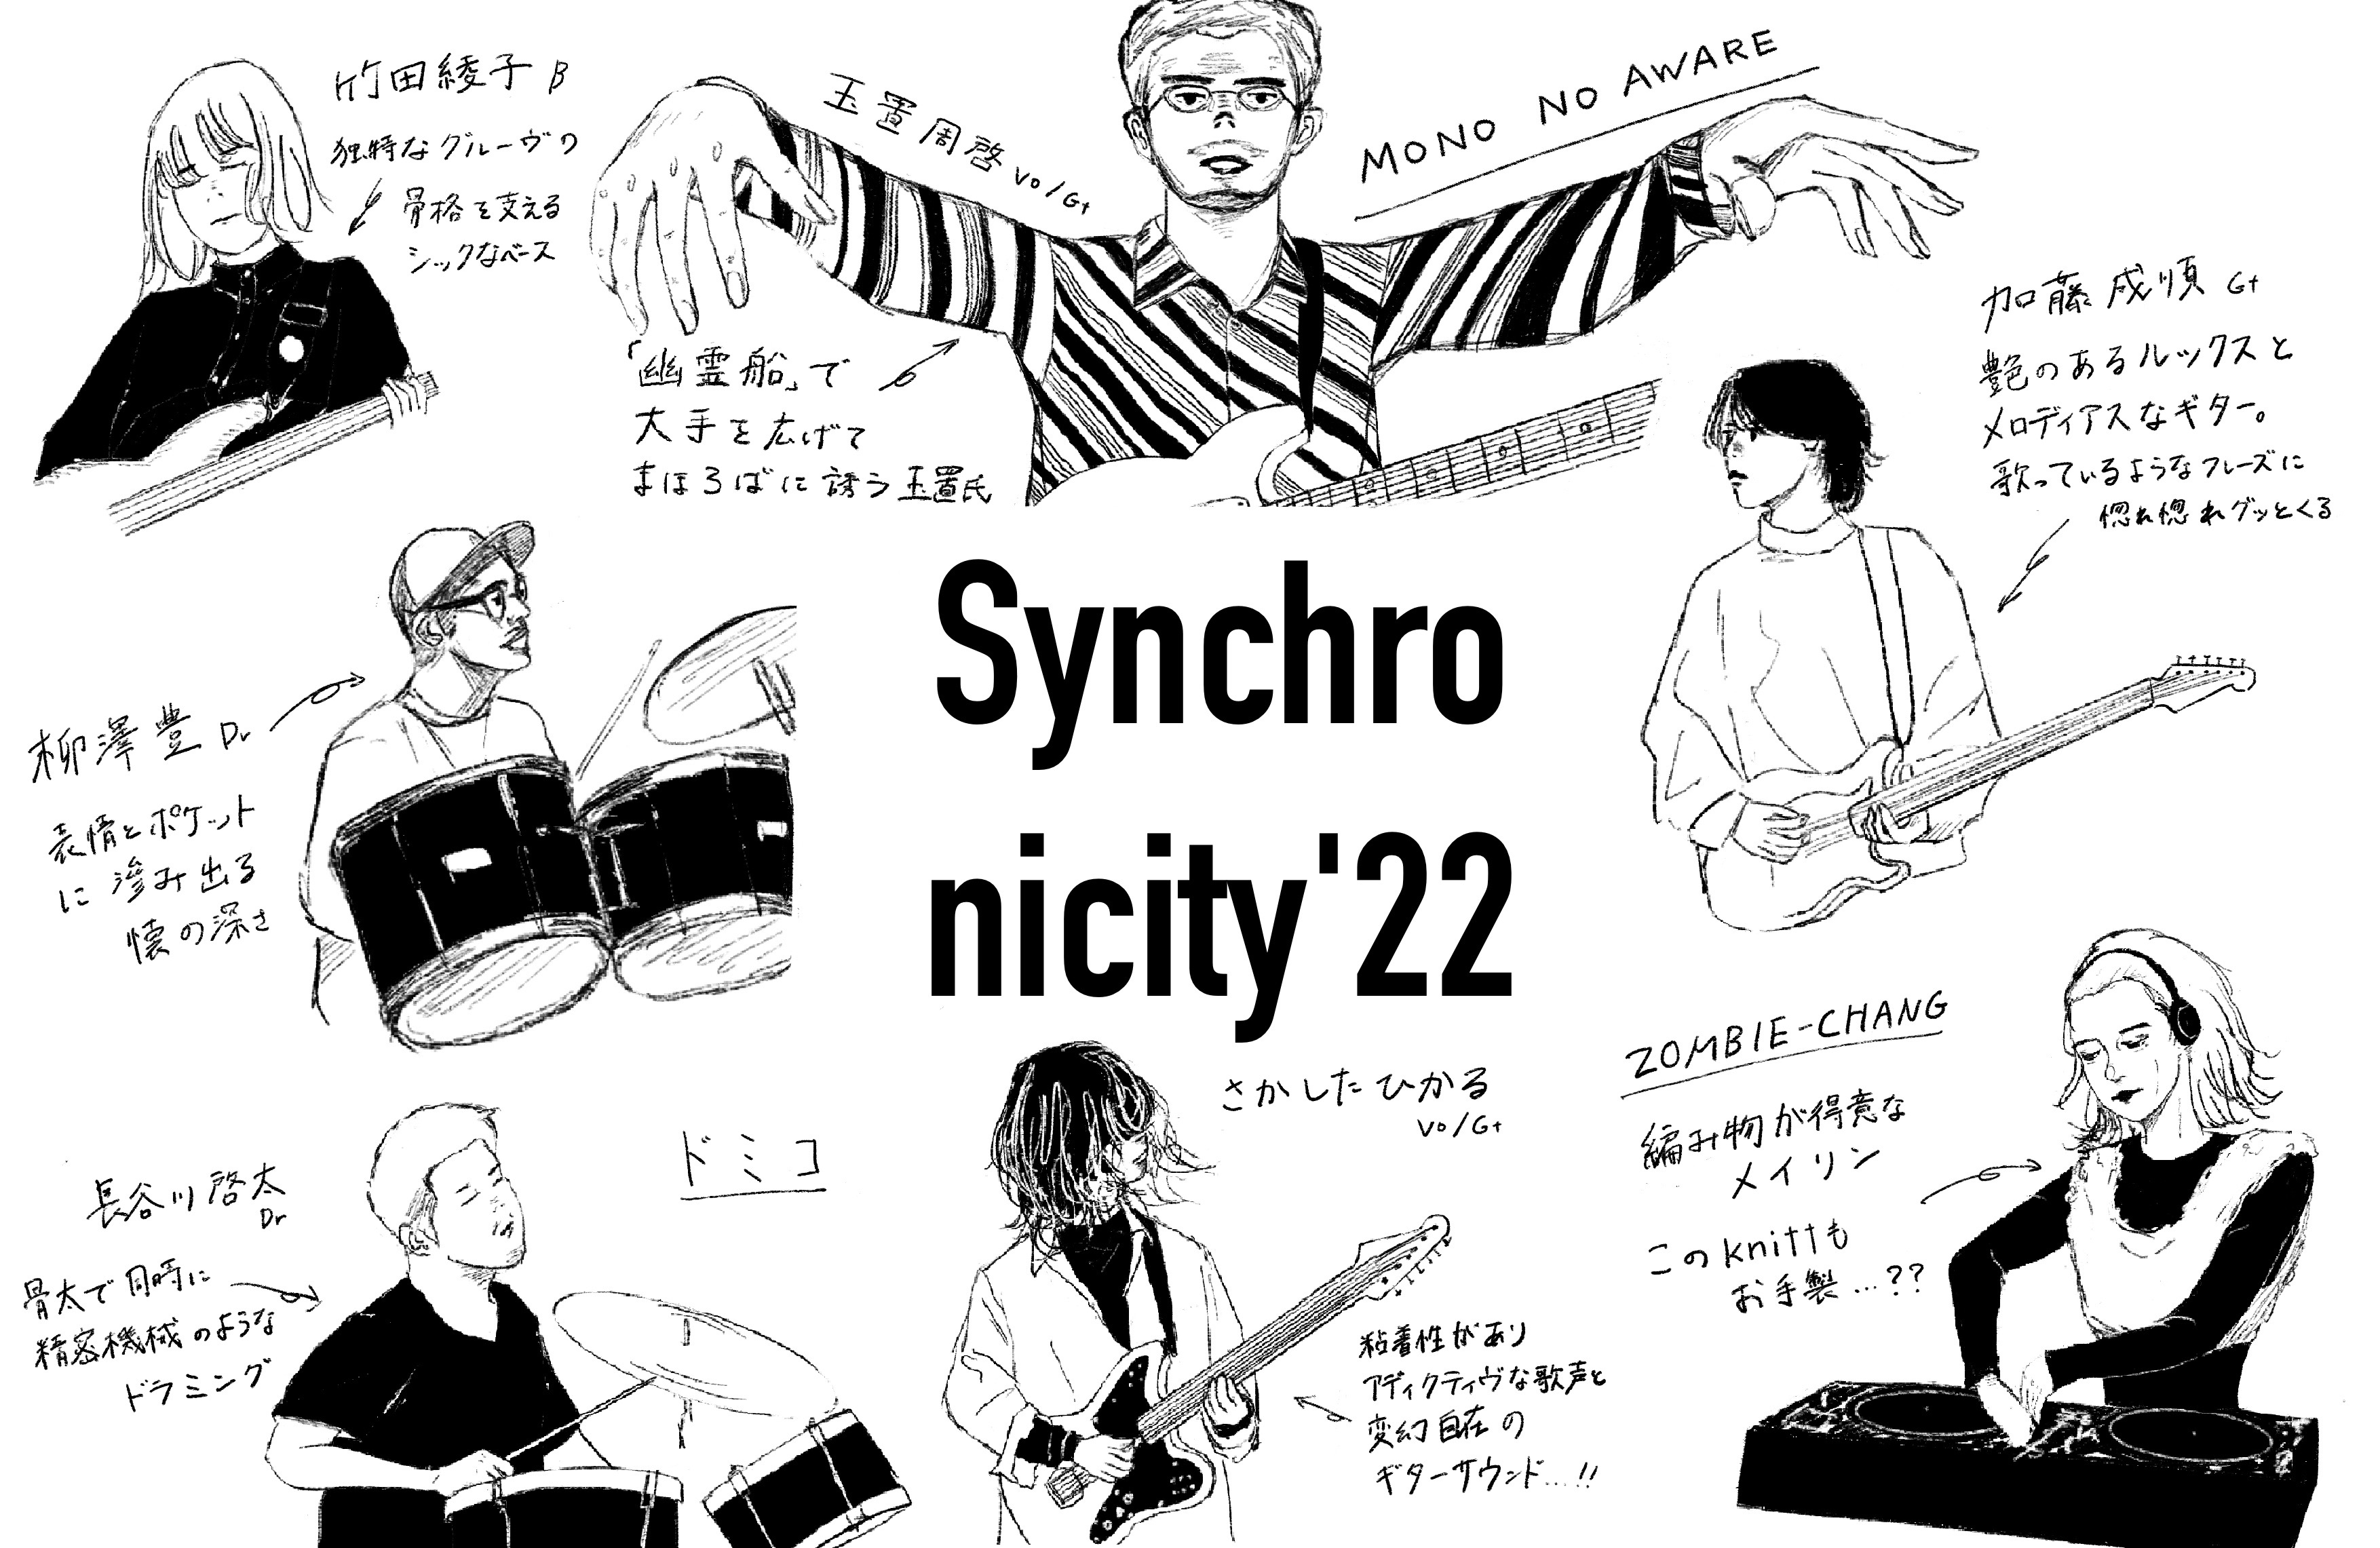 SYNCHRONICITY'22』をイラストで振り返る MONO NO AWARE、ZOMBIE-CHANG 